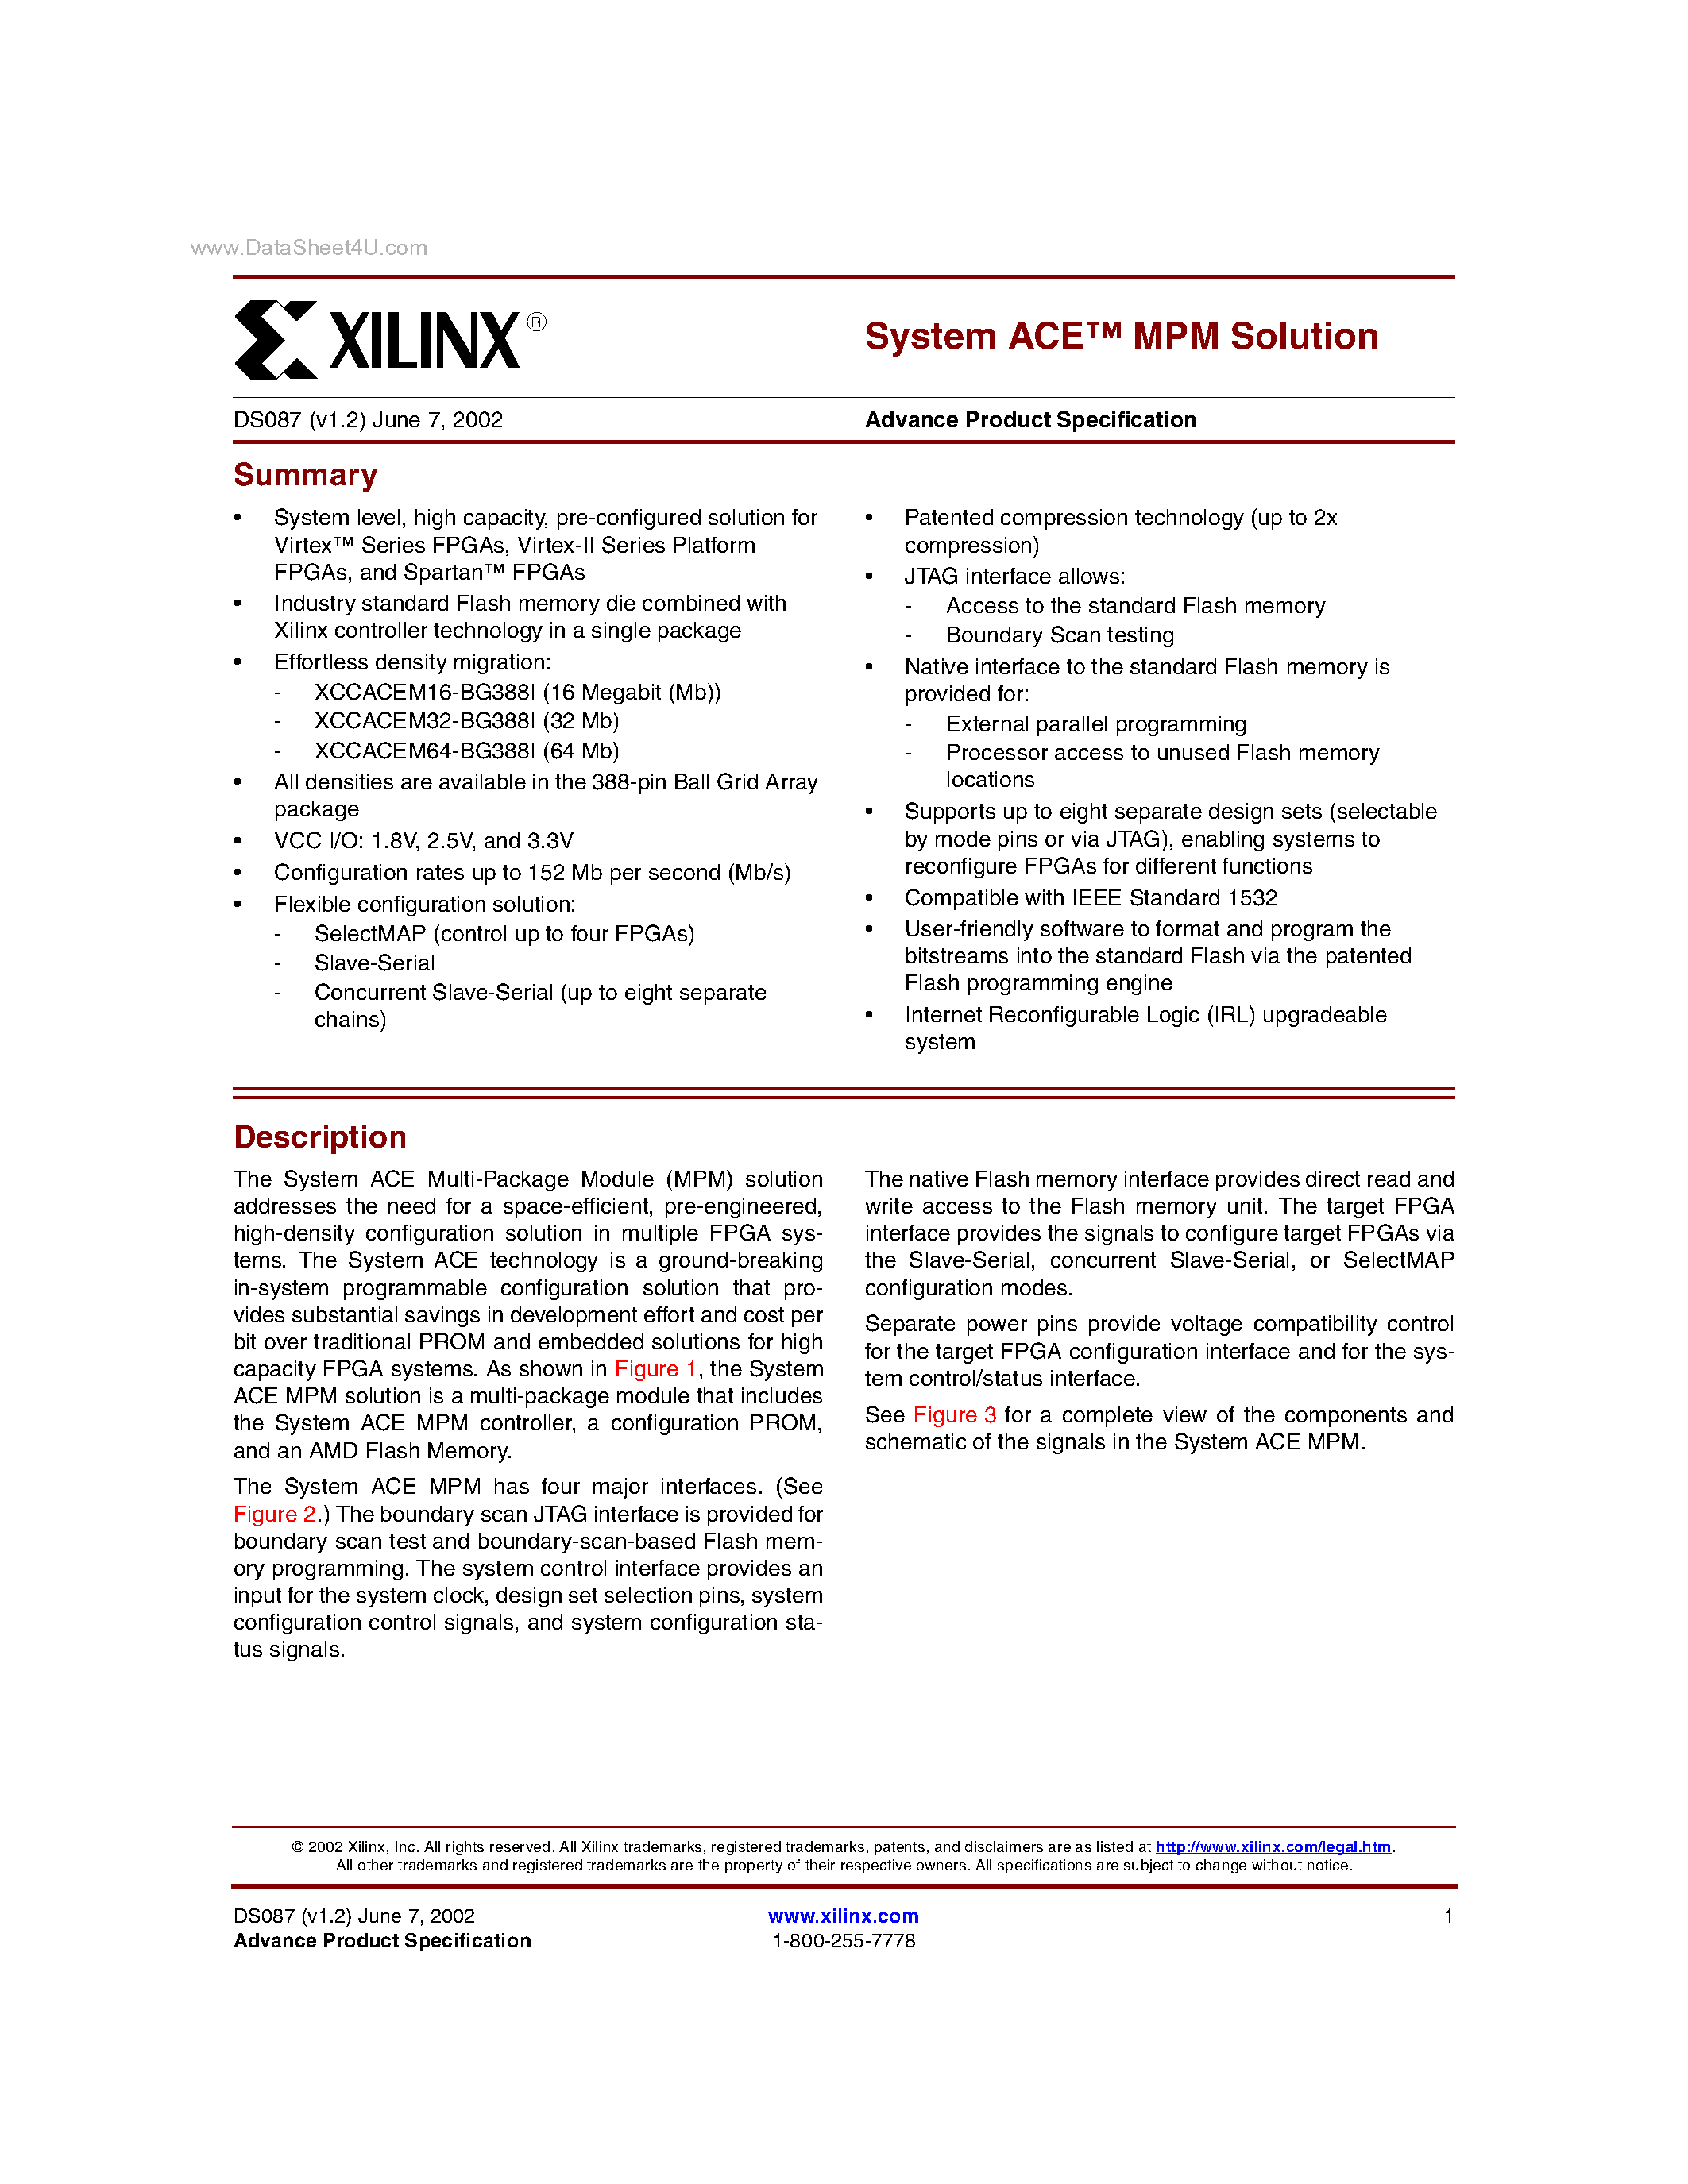 Даташит XCCACEM16 - (XCCACEM16 - XCCACEM64) System ACE MPM Solution страница 1